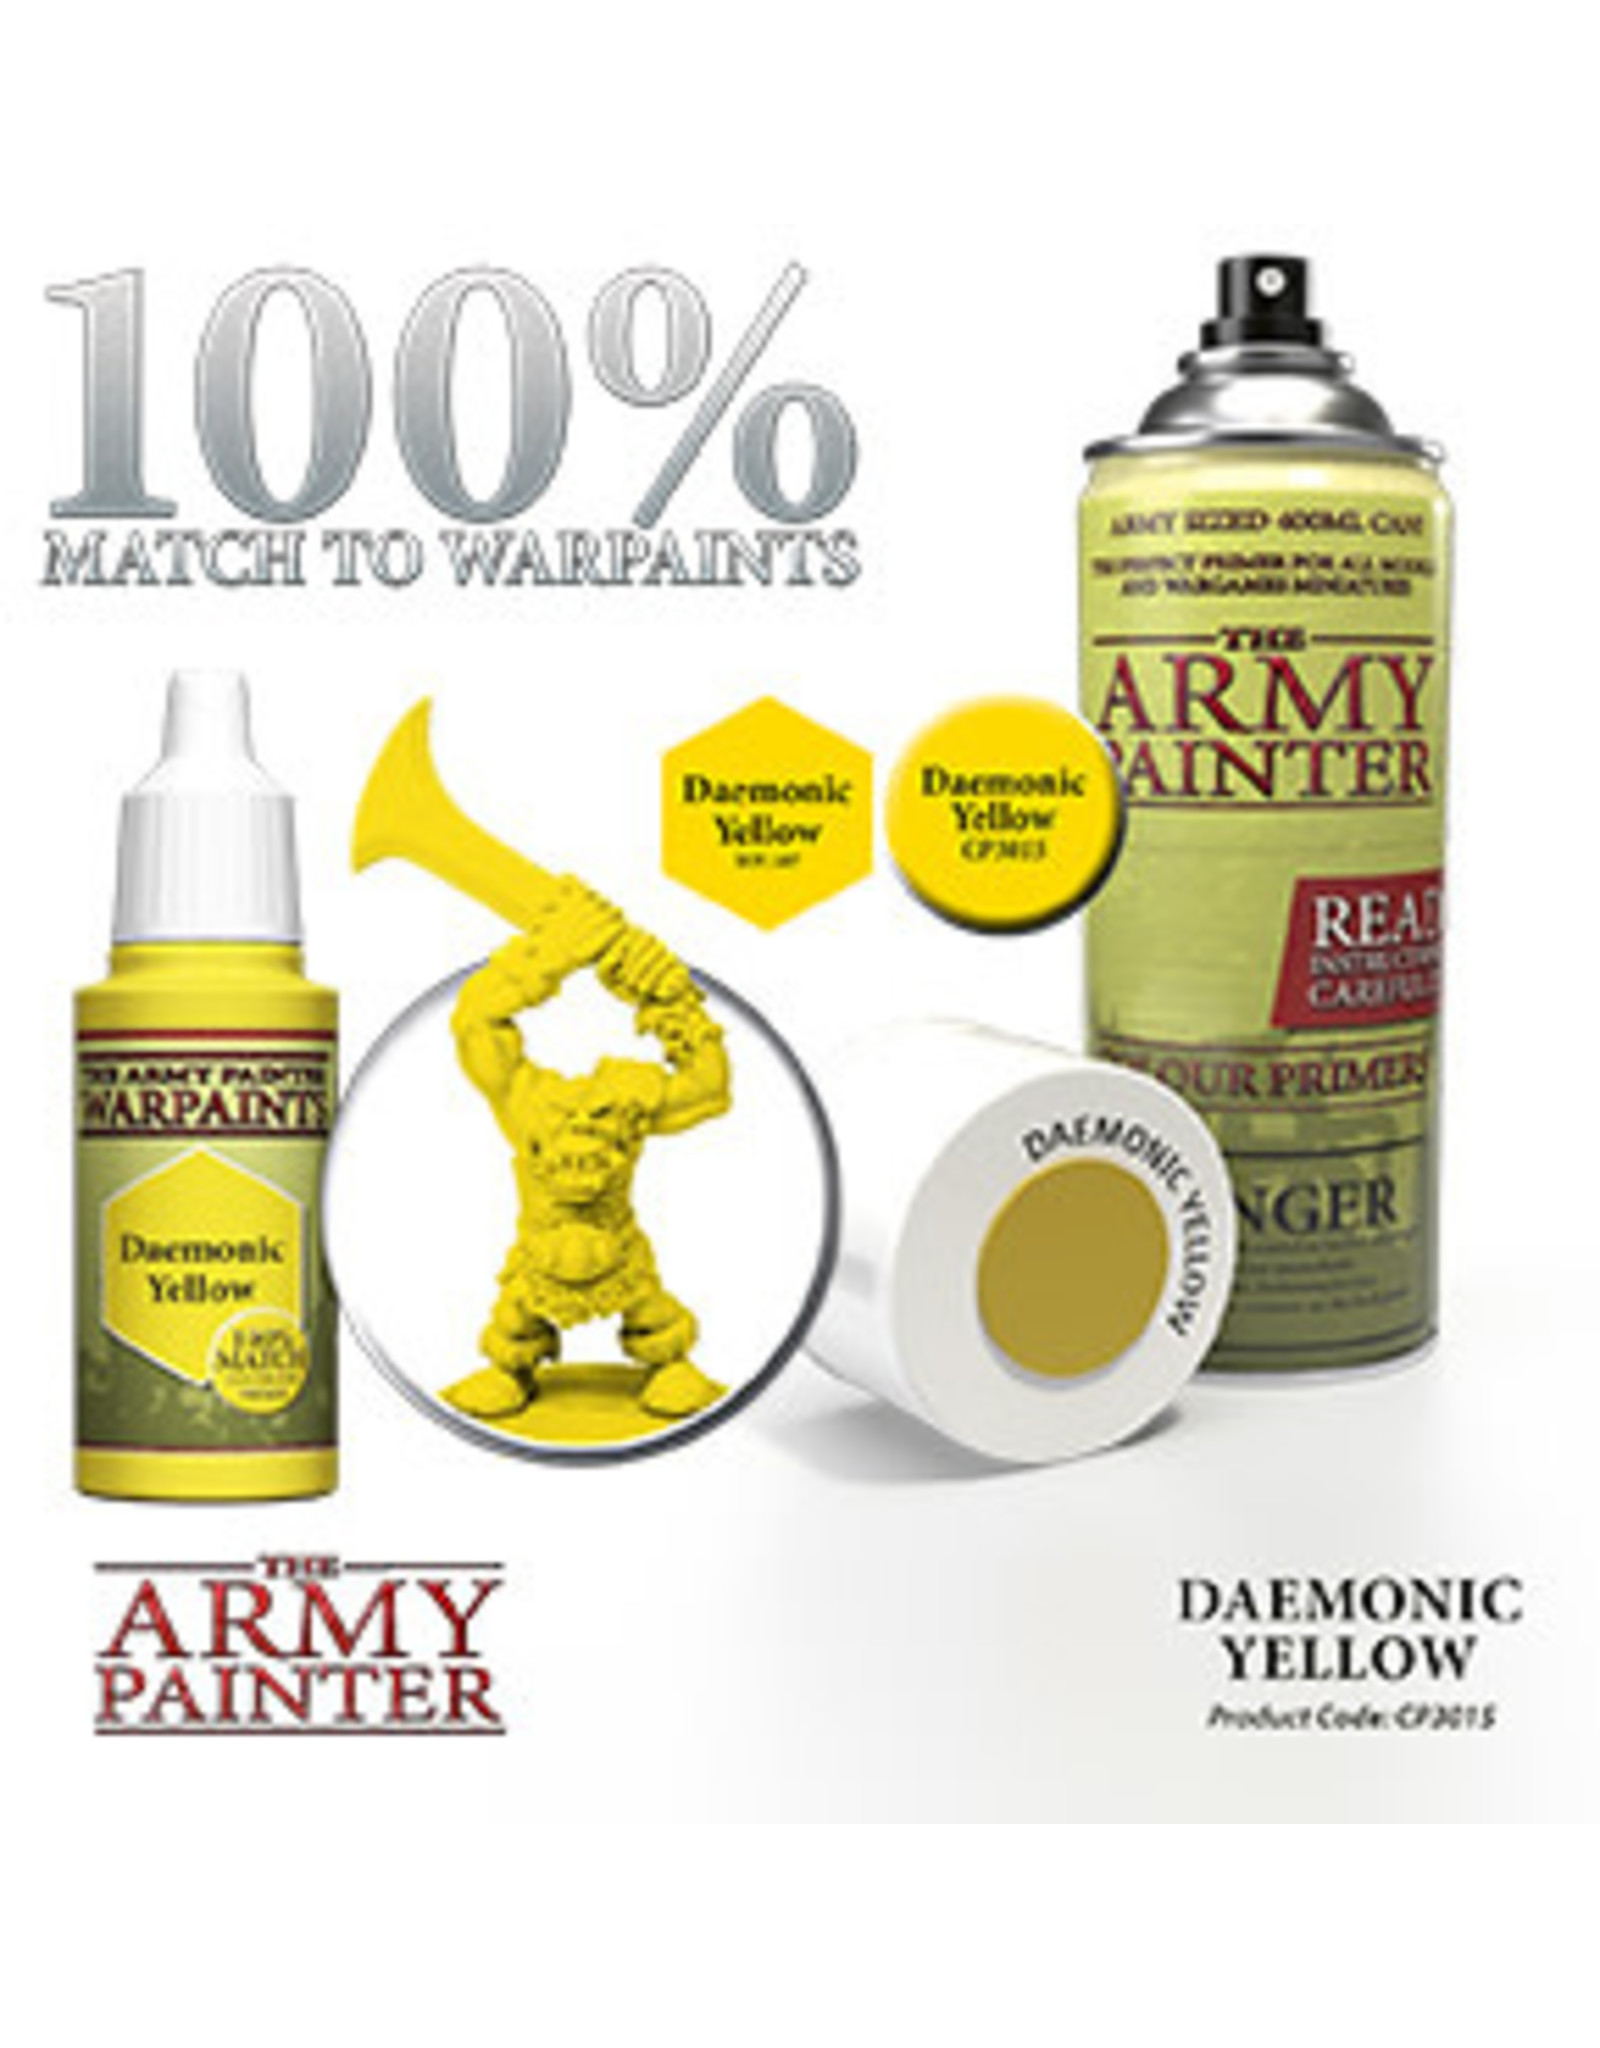 Army Painter Colour Primer Daemonic Yellow